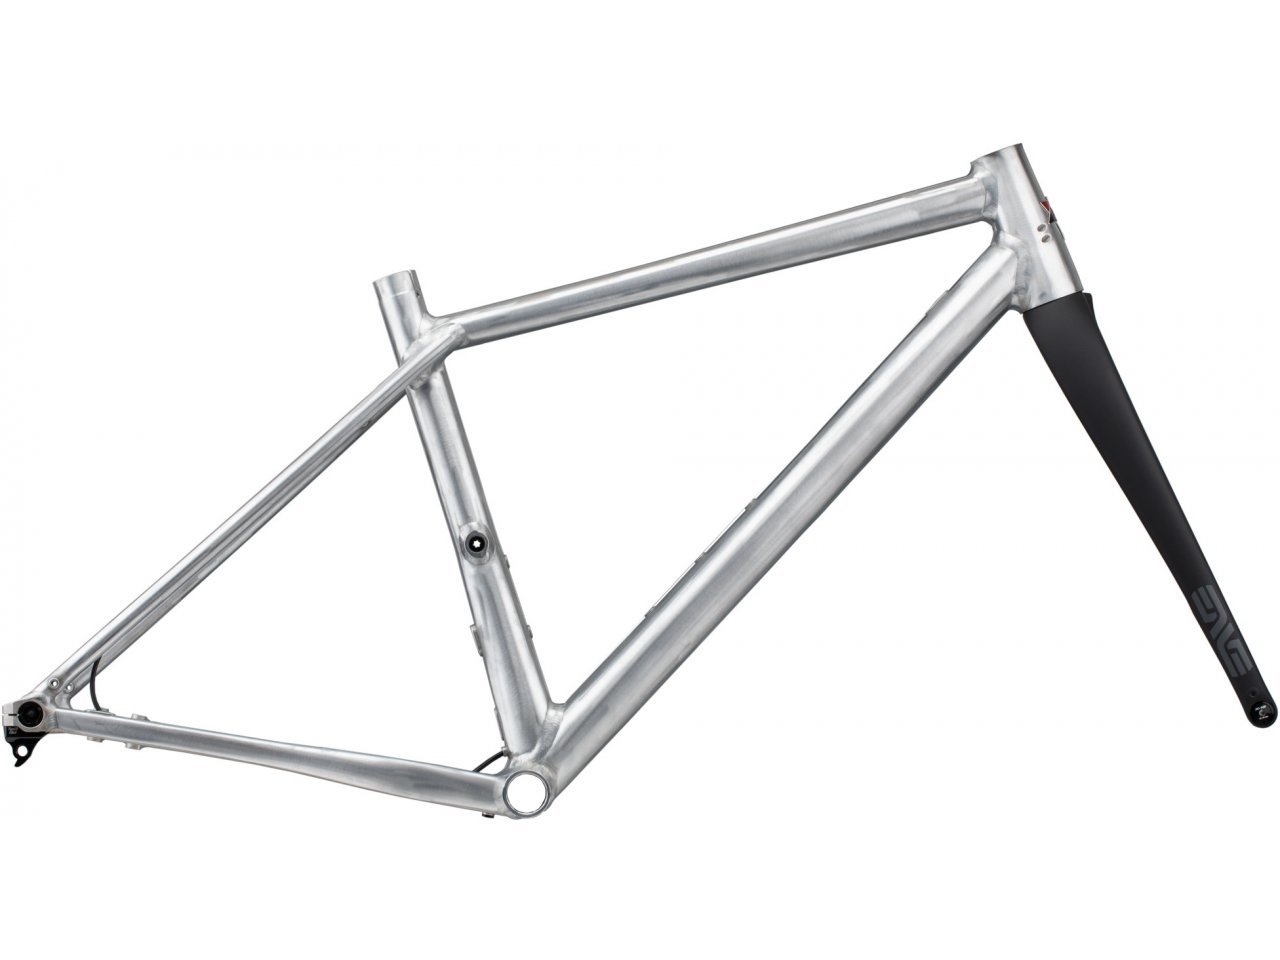 Liteville 4-One Factory Build Complete Bike